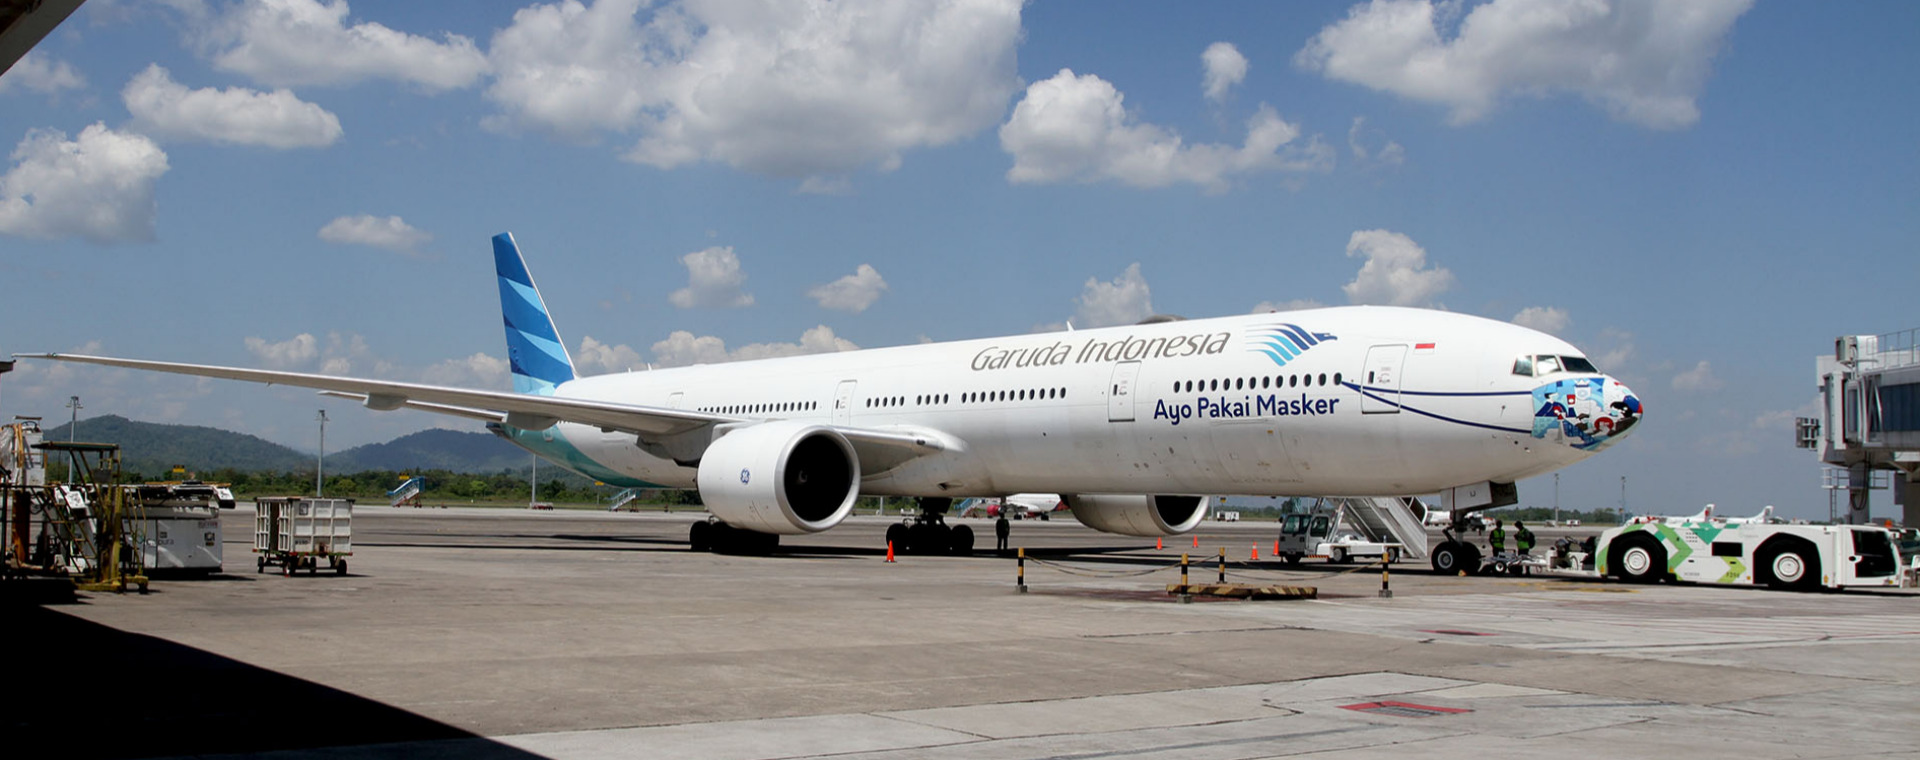  Siasat Garuda Indonesia (GIAA) Bisa Lepas Landas Mengarungi 2024